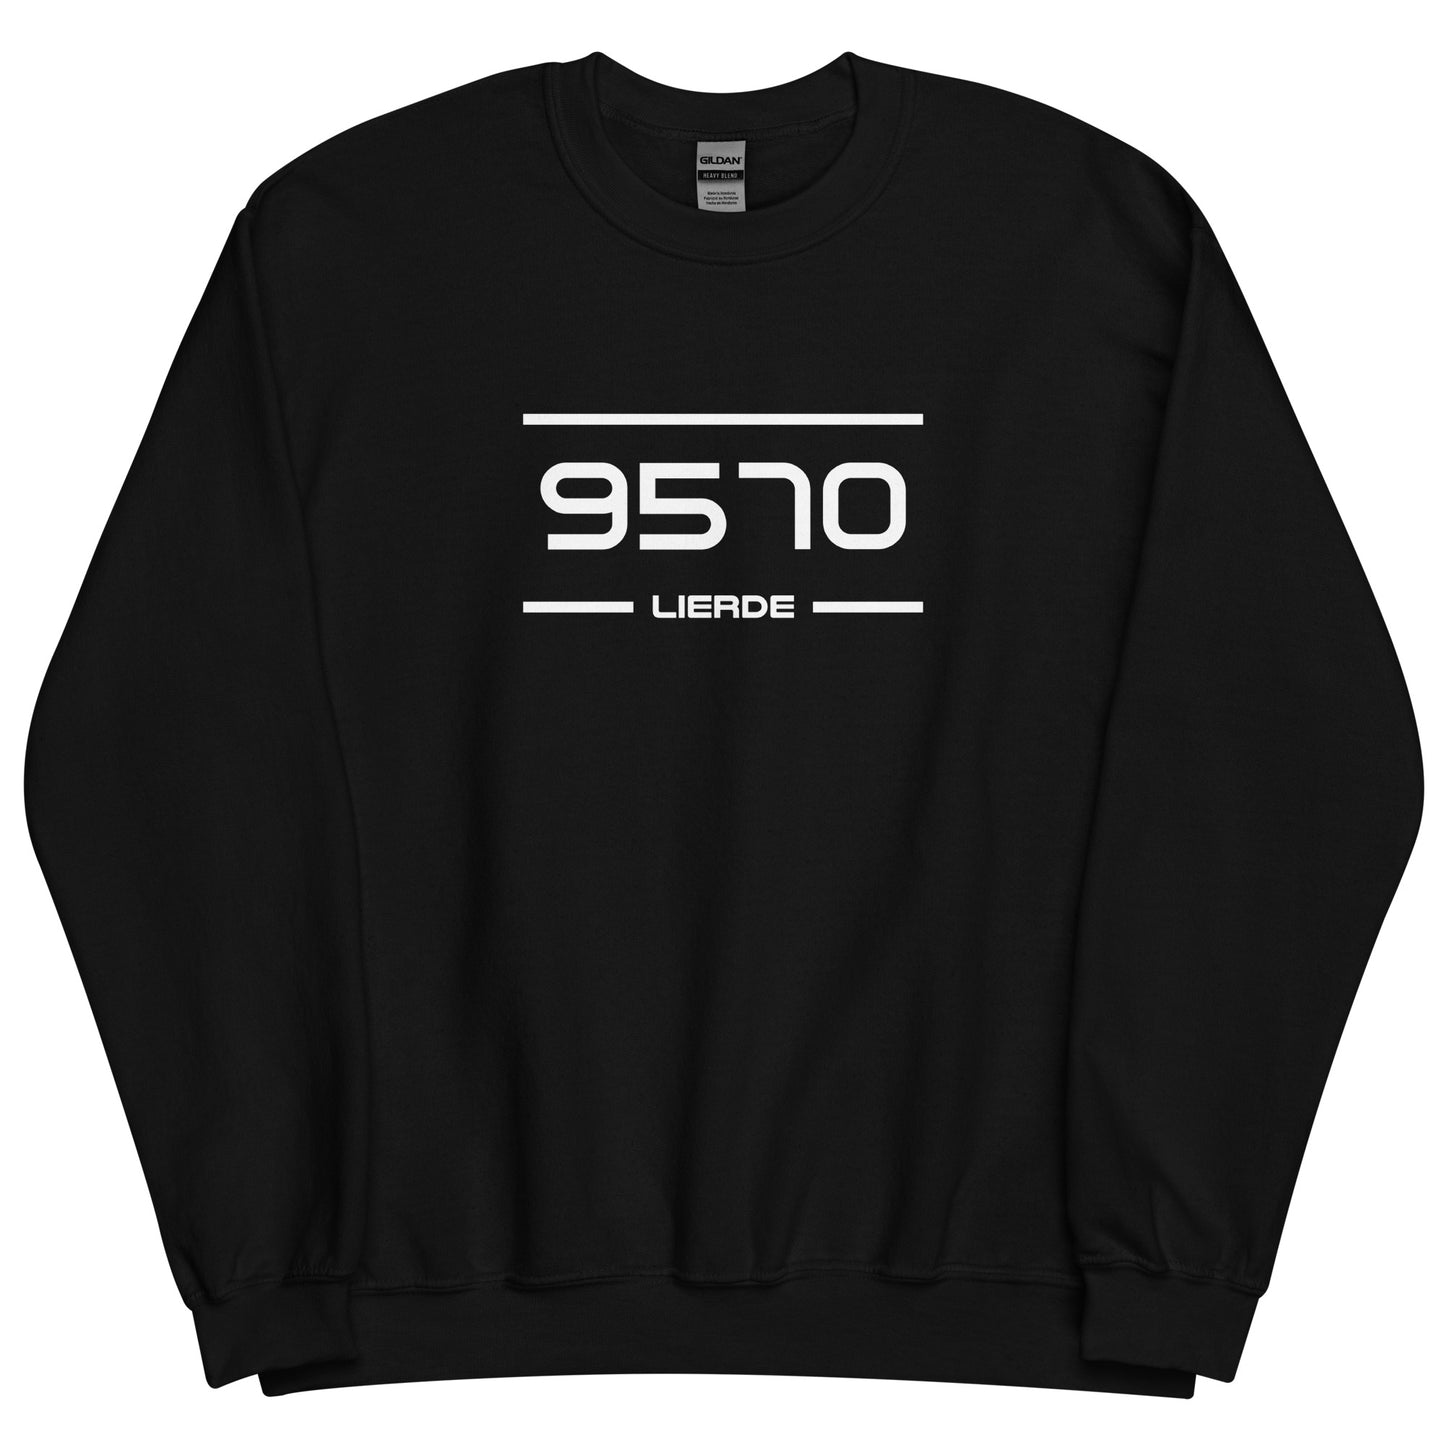 Sweater - 9570 - Lierde (M/V)